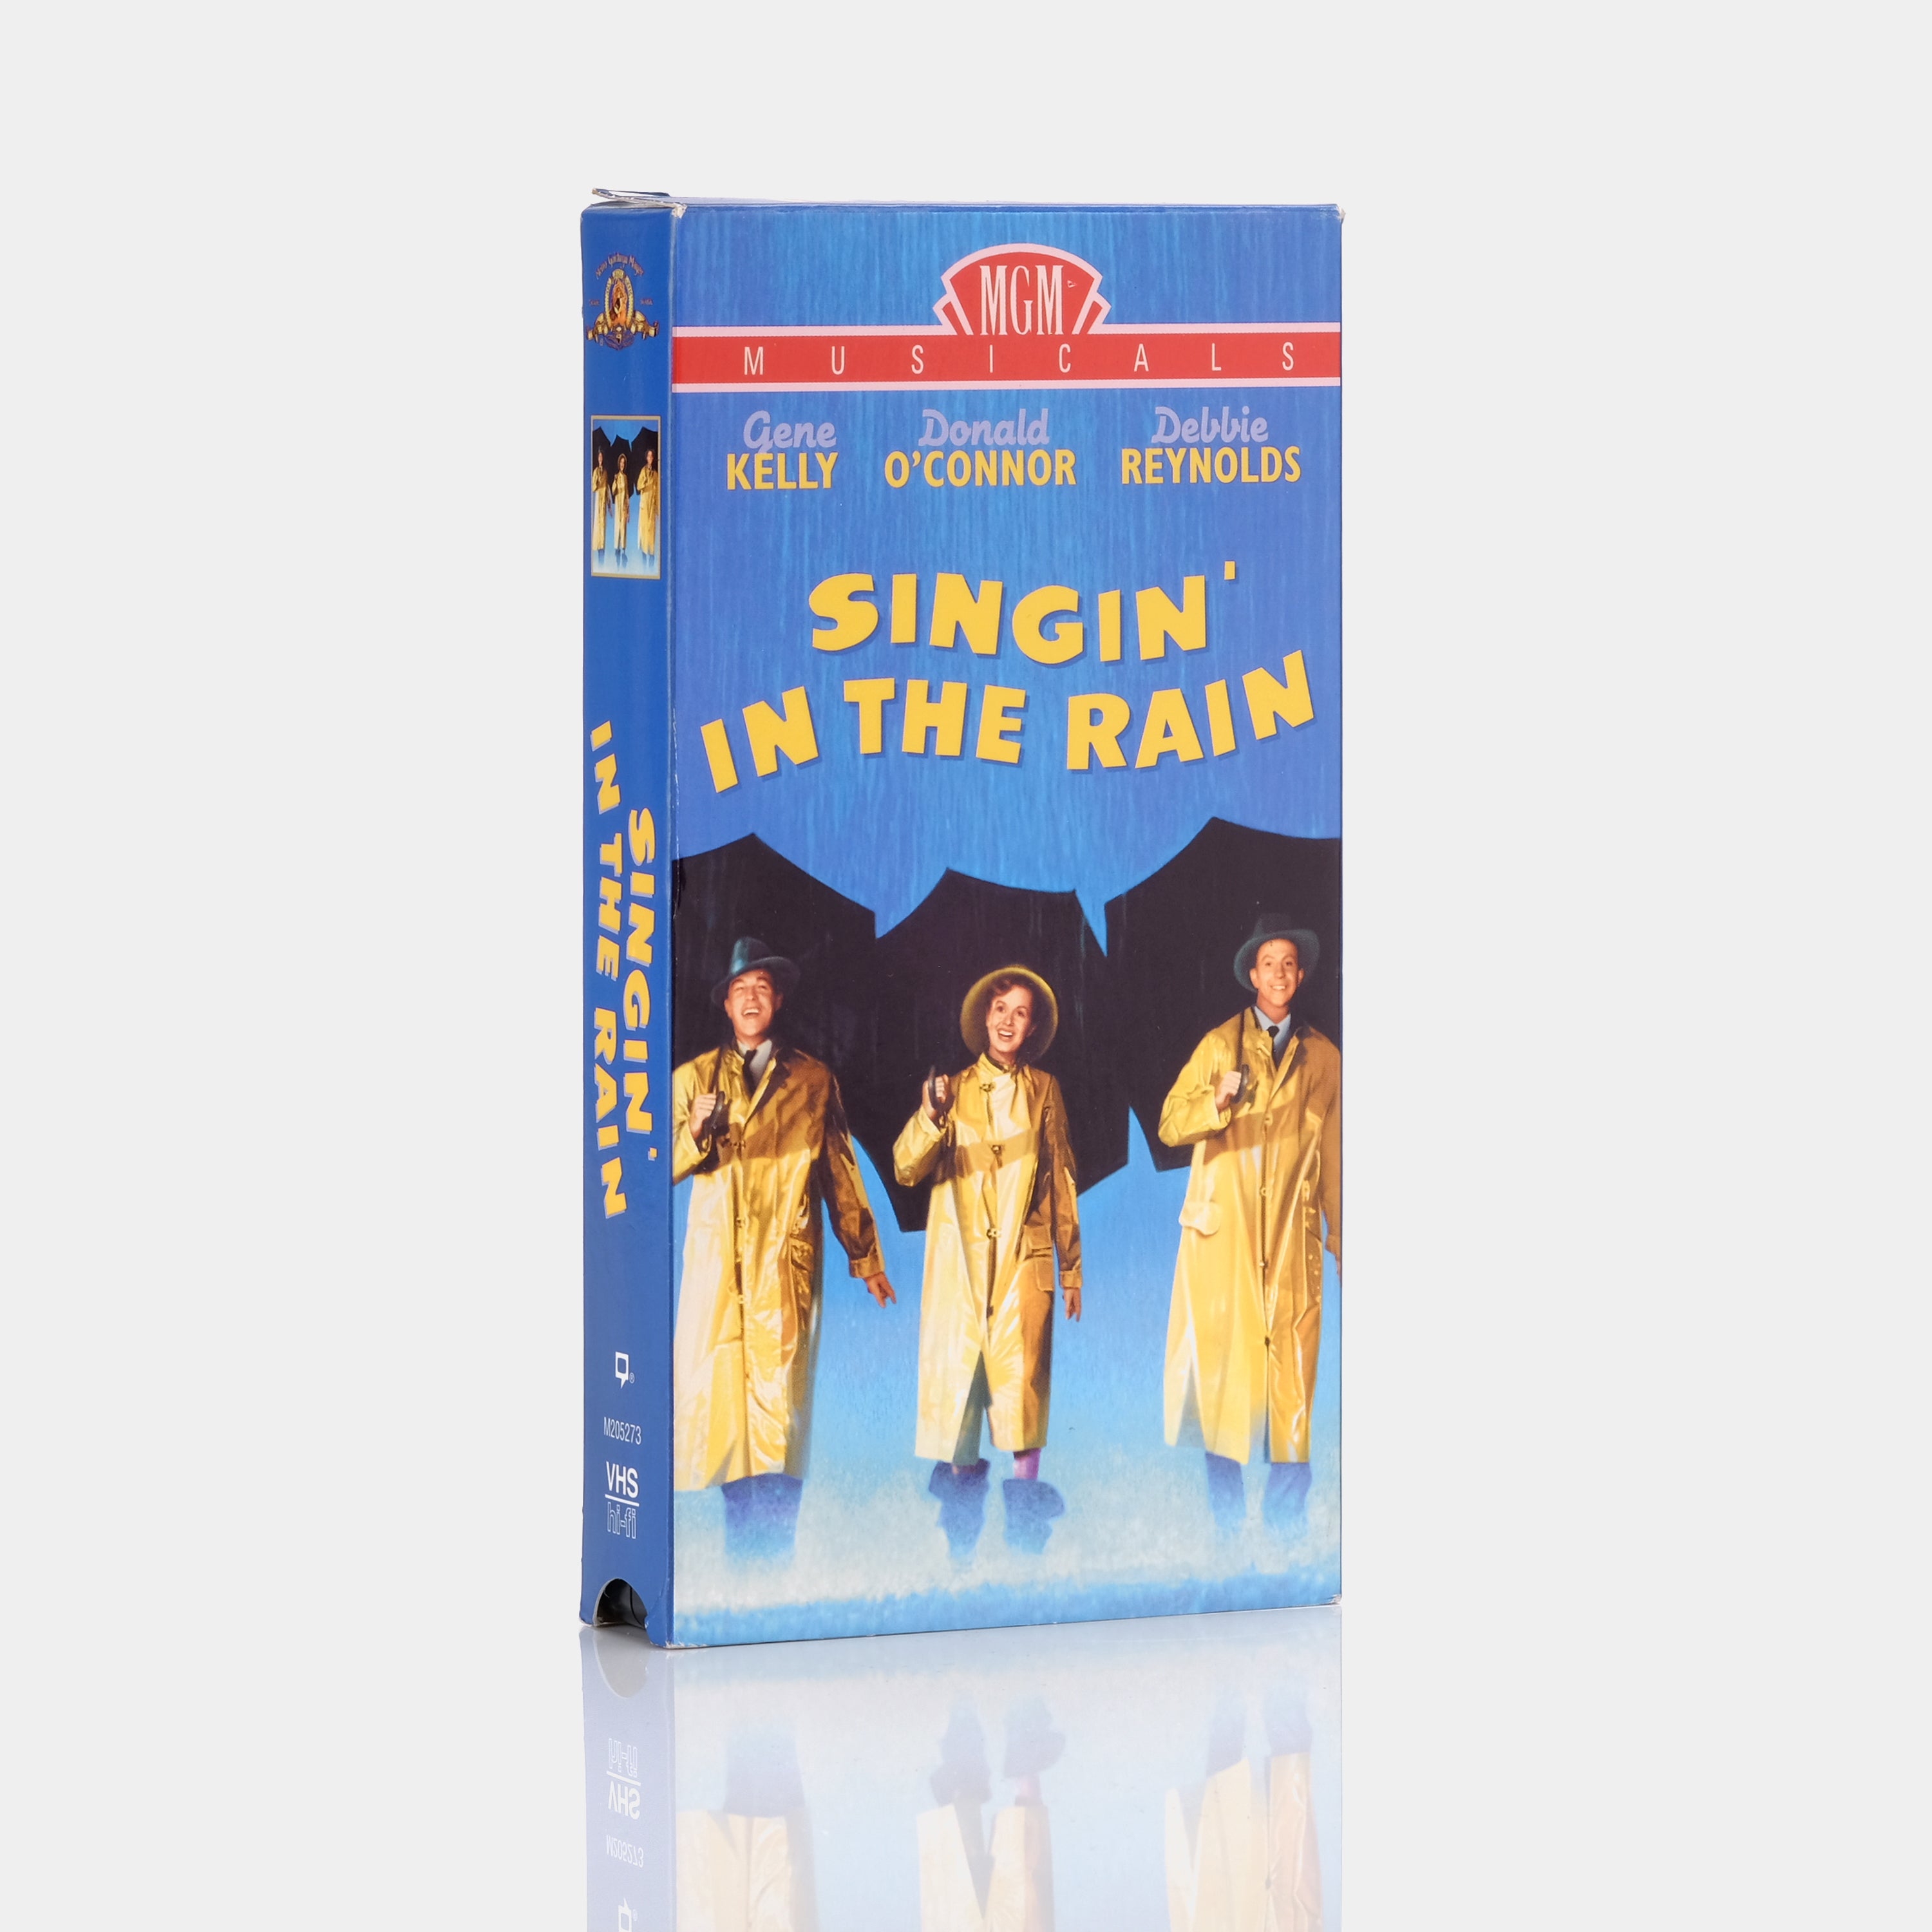 Singin' in the Rain VHS Tape